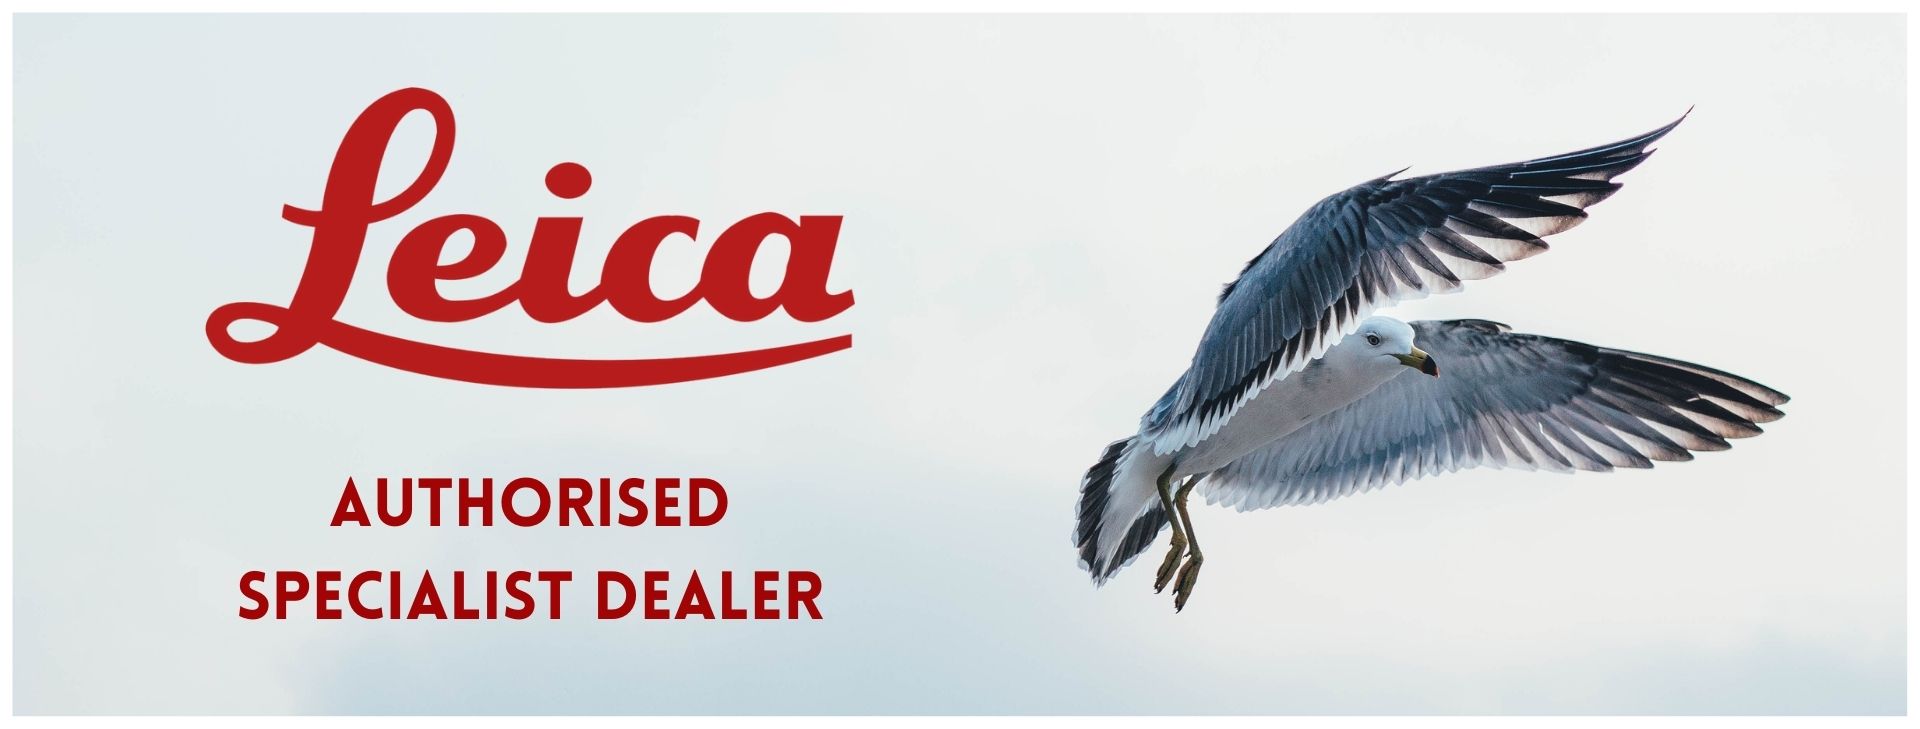 ace optics is a leica authorised dealer. bird picture